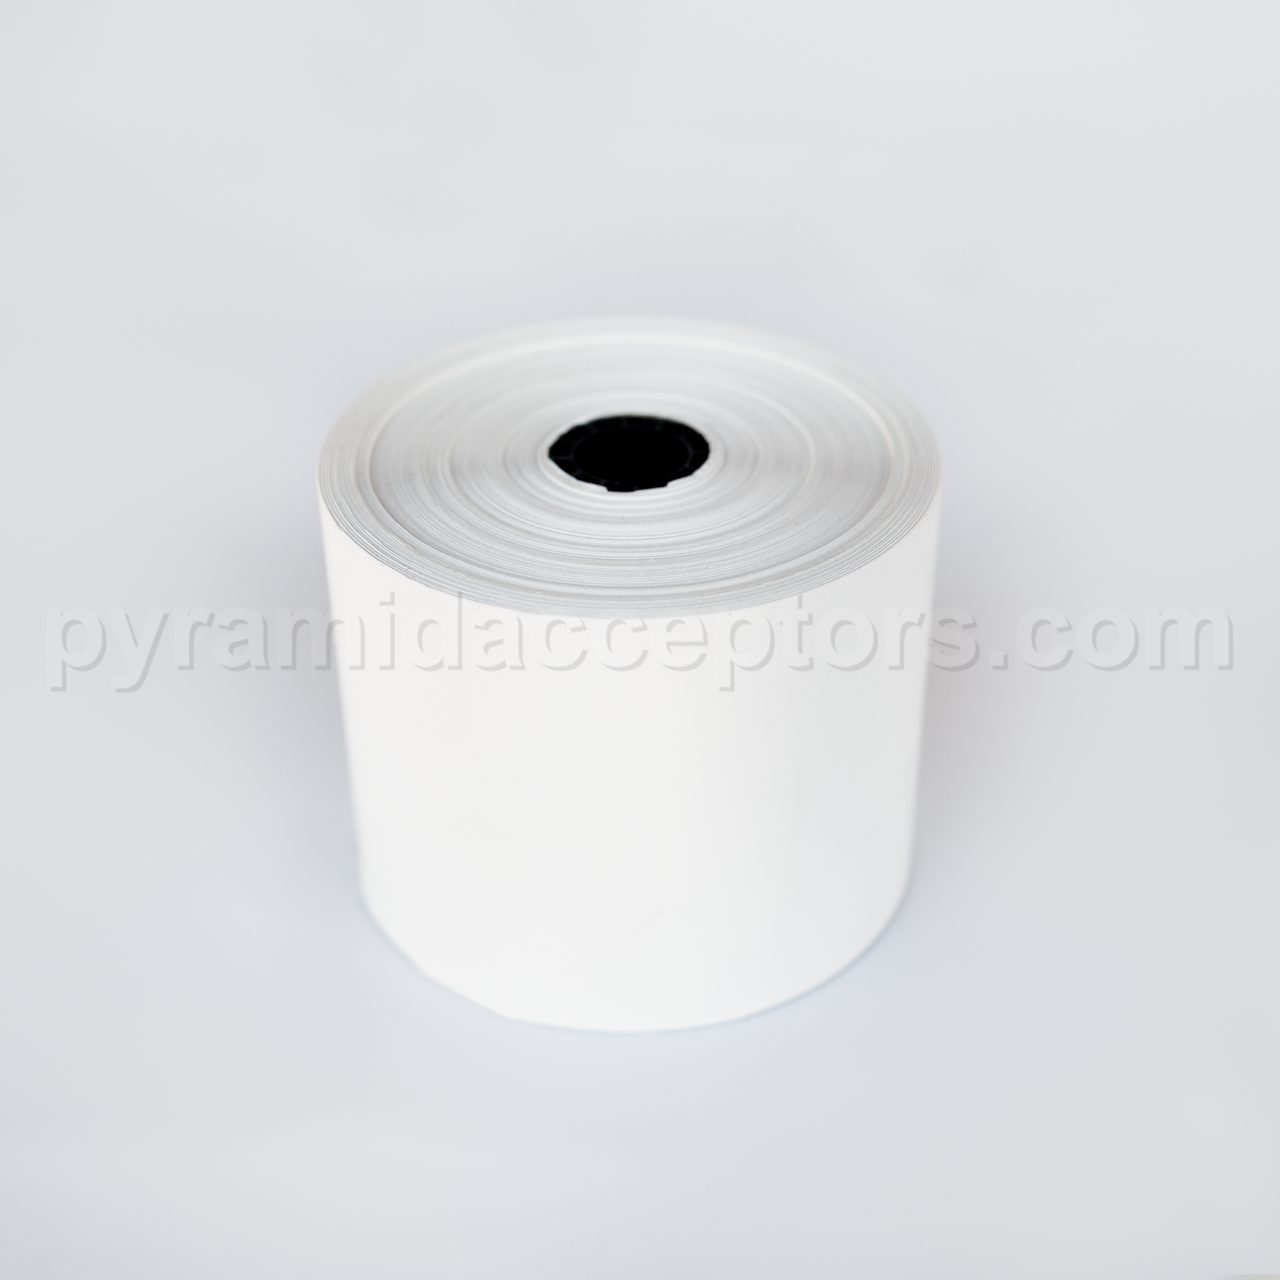 Phoenix Thermal Paper Roll (PHX) (Paper1) - Pyramid Technologies, Inc.